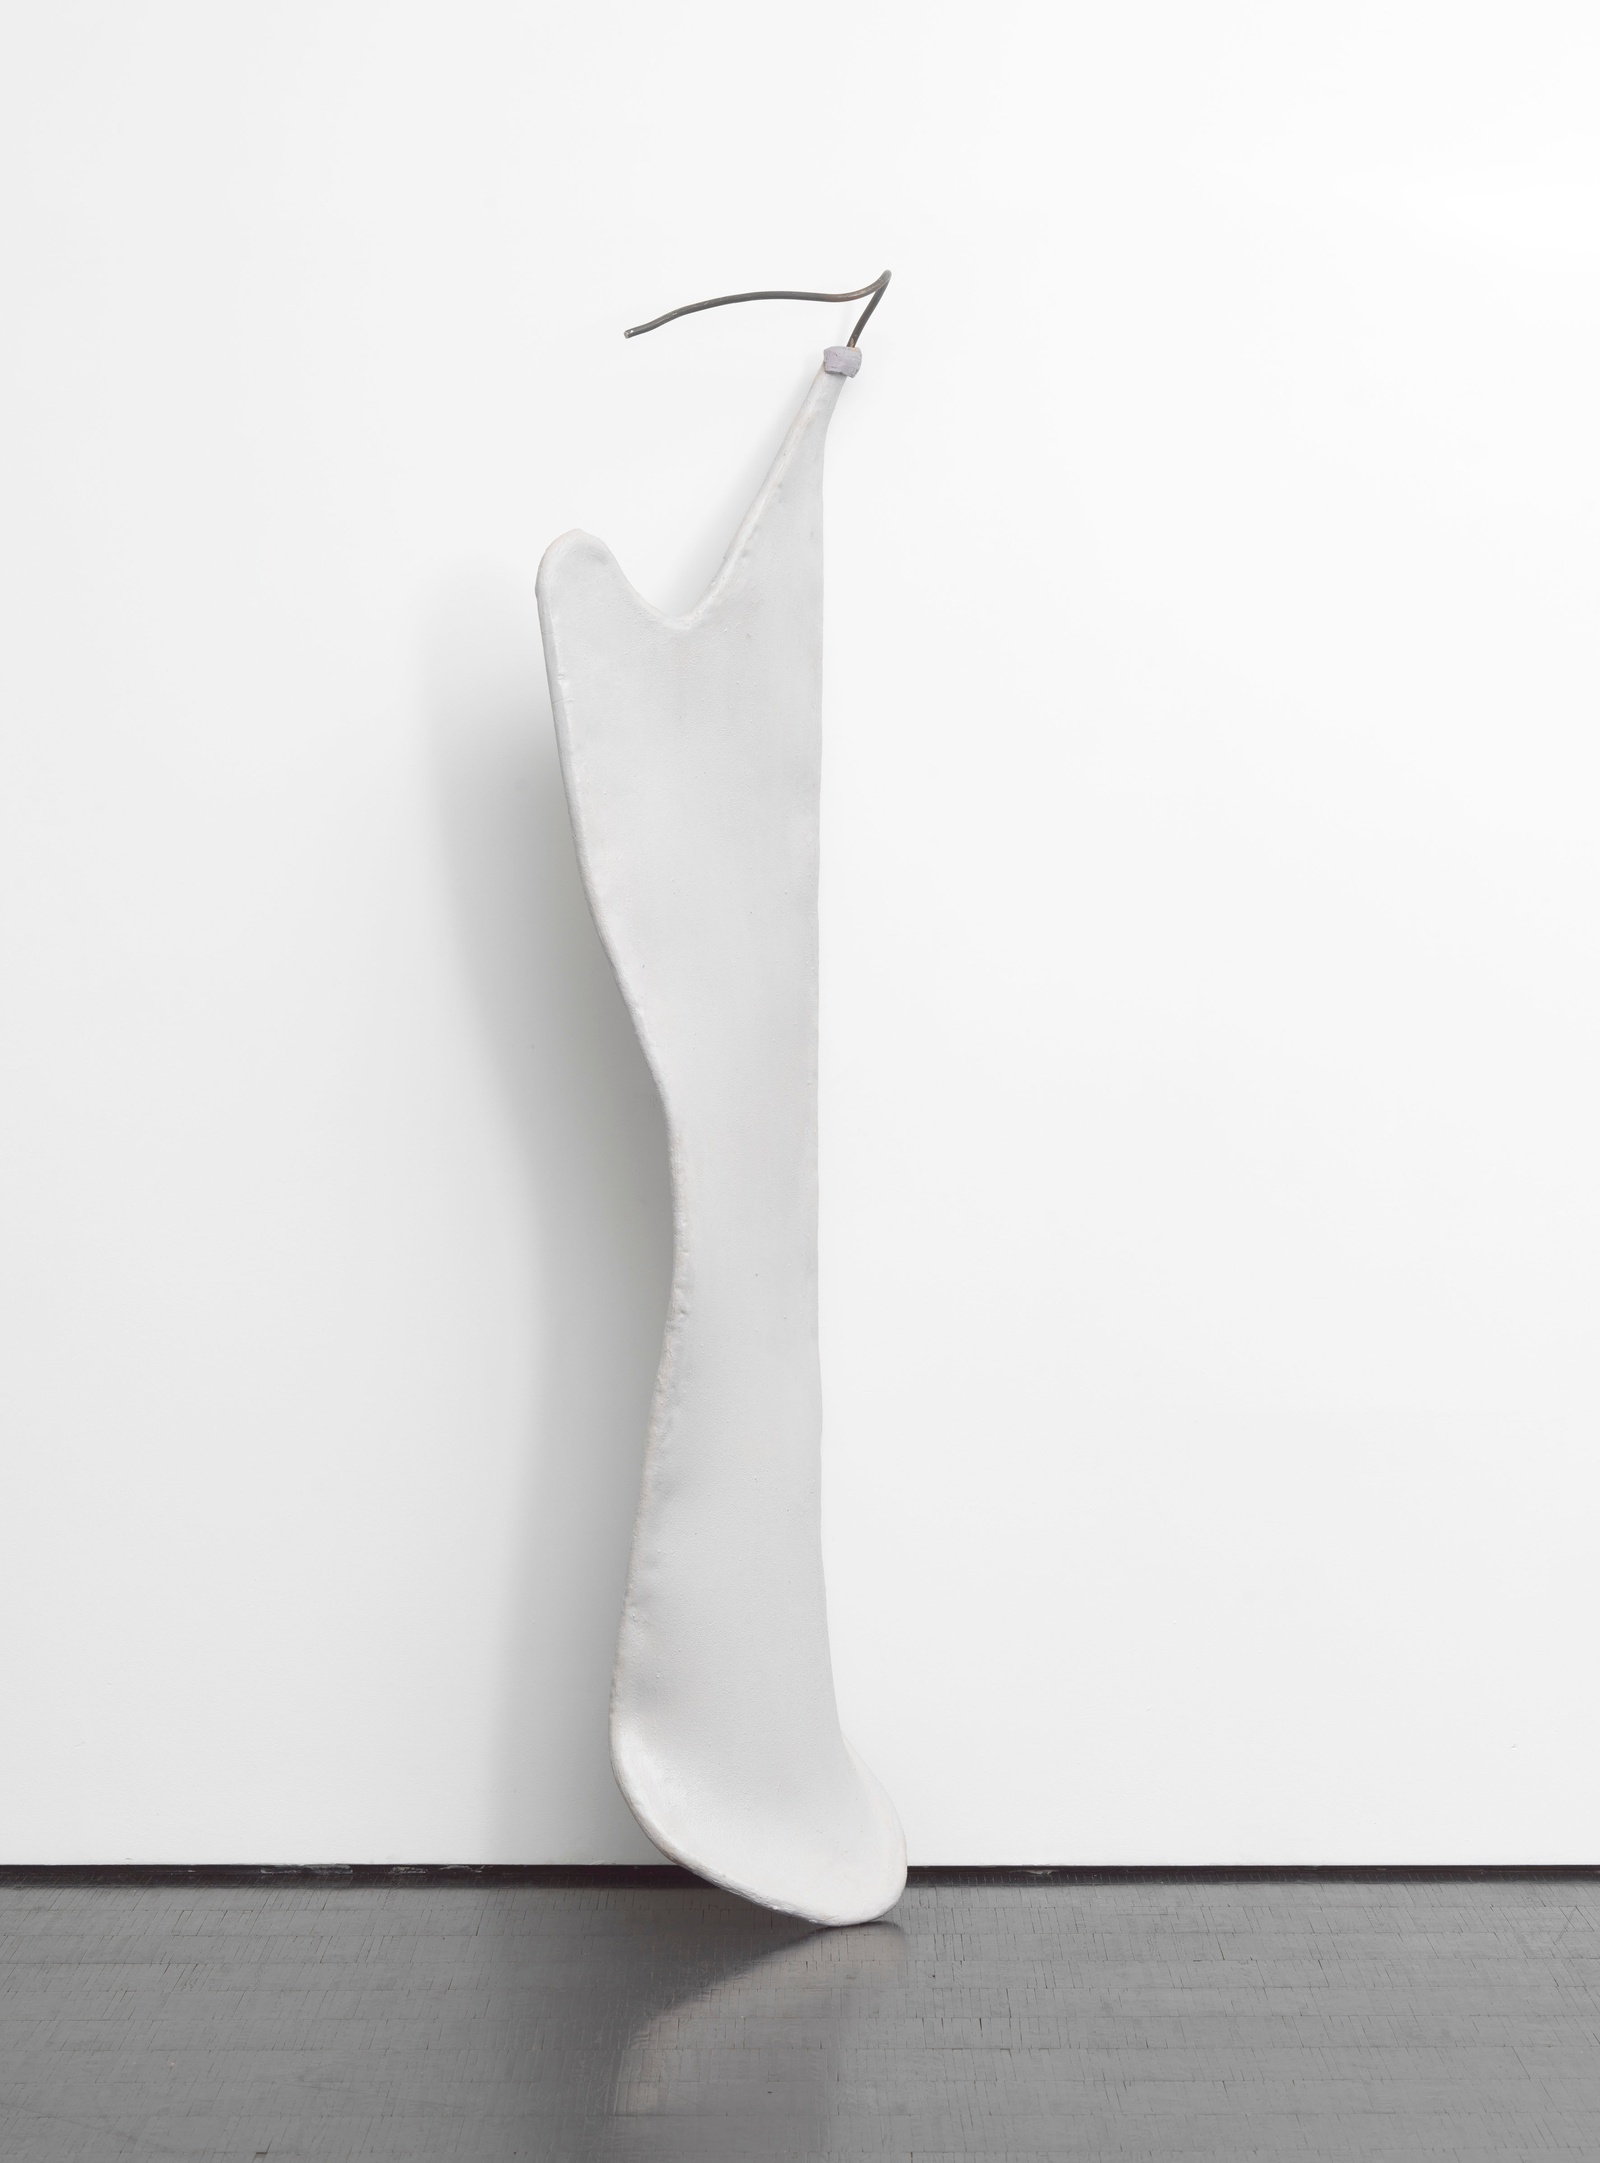 Olga BalemaBiomorphic Attachment, 2014latex, foam, steel195 x 60 x 40 cm | 76 3/4 x 23 2/3 x 15 3/4 in